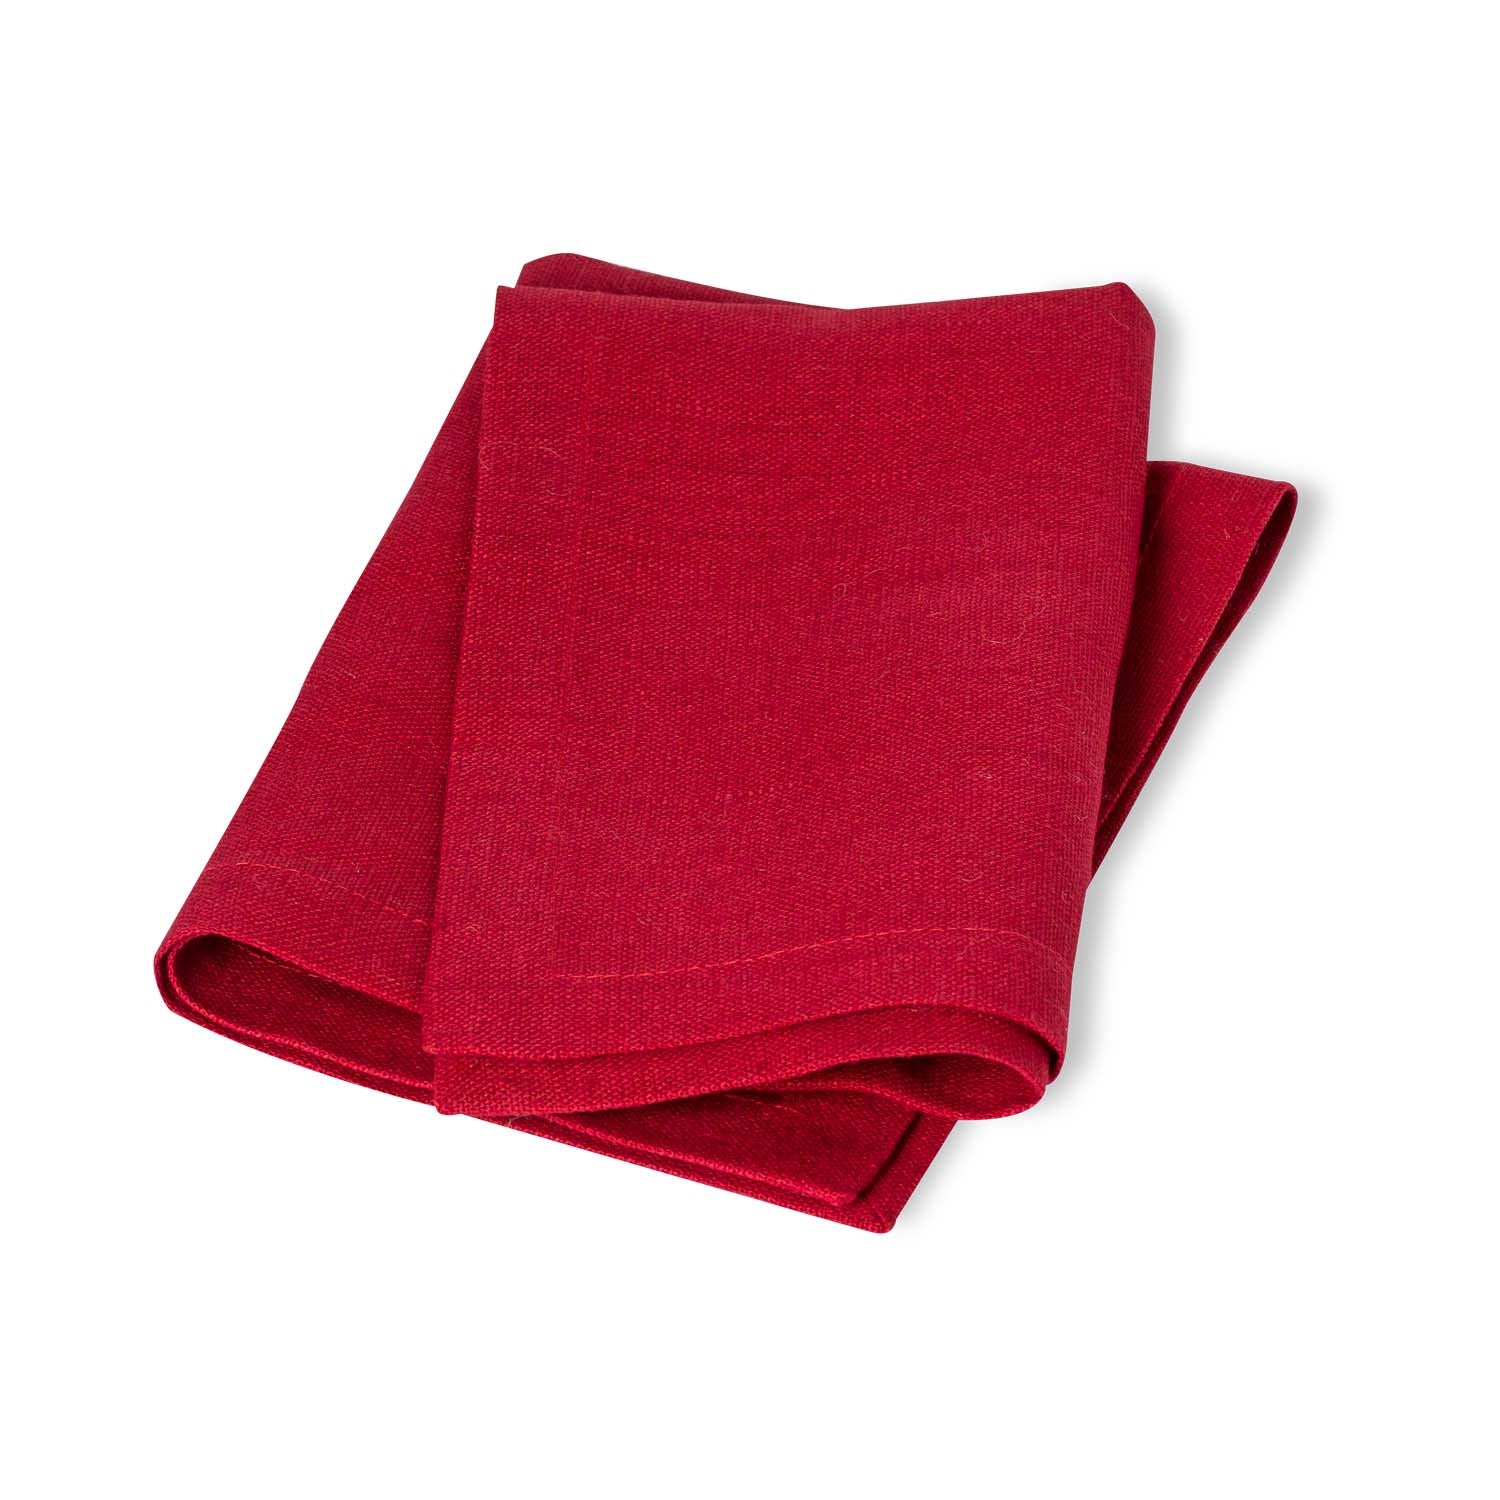 LINEN NAPKINS SET 6 Raspberry red Washed 100% linen napkins